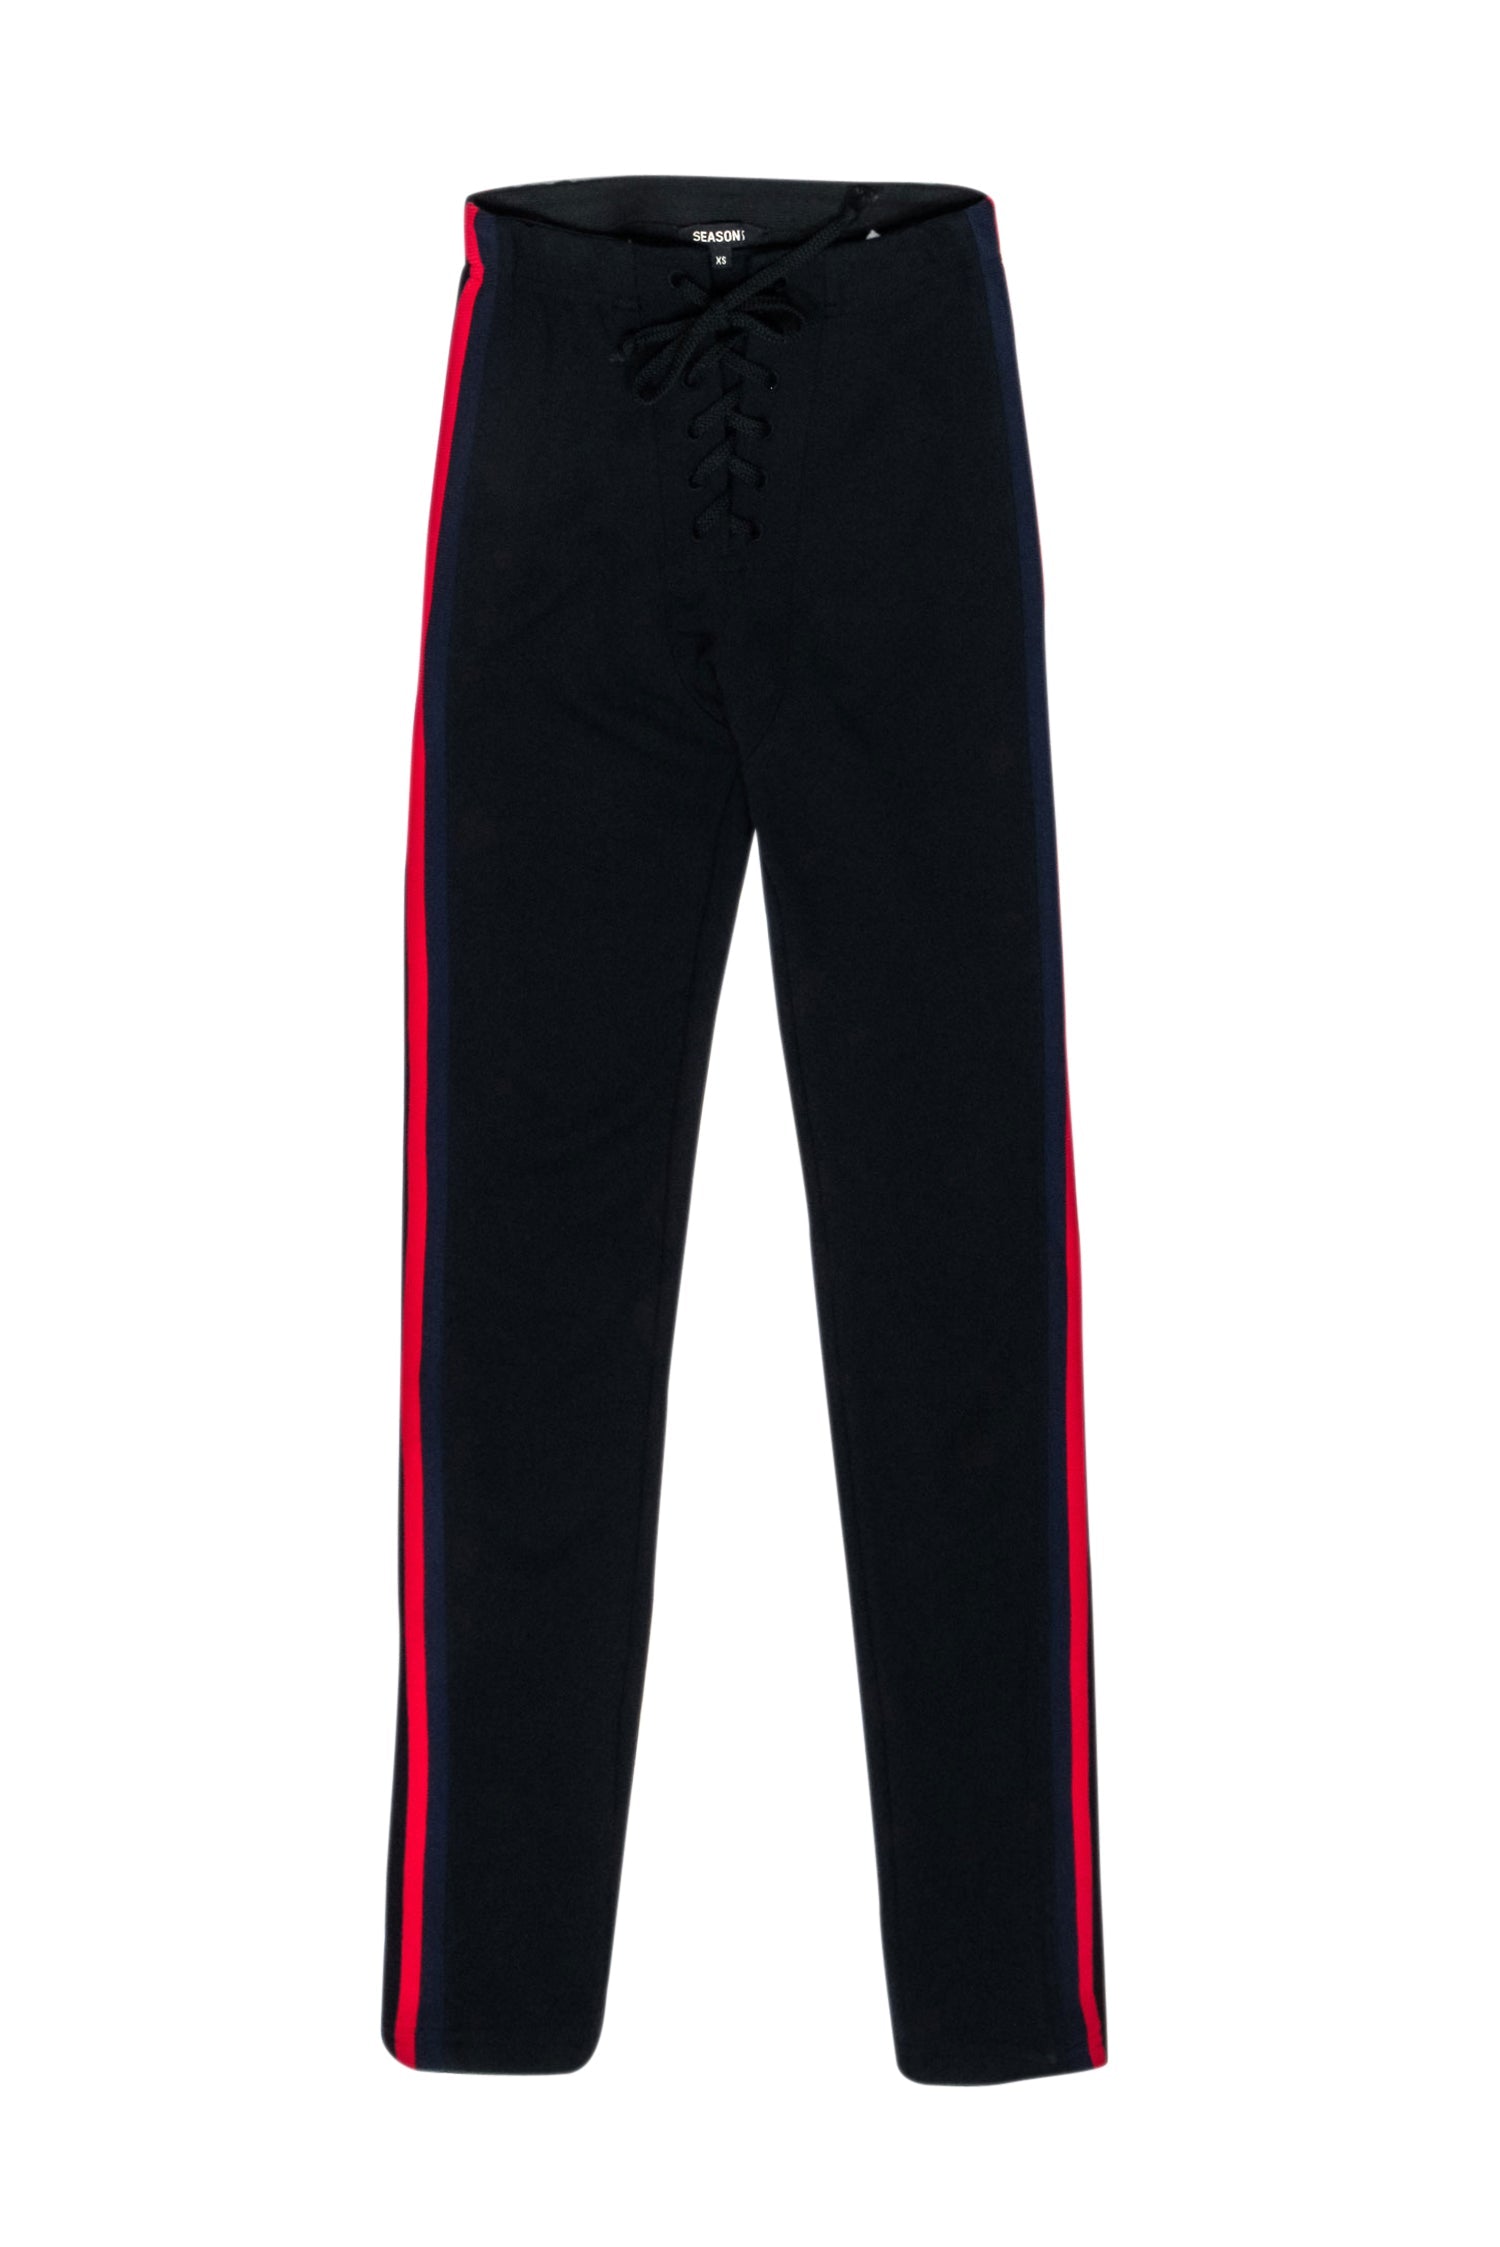 Yeezy Season 5 - Black Lace-Up Leggings w/ Red & Navy Stripes Sz XS